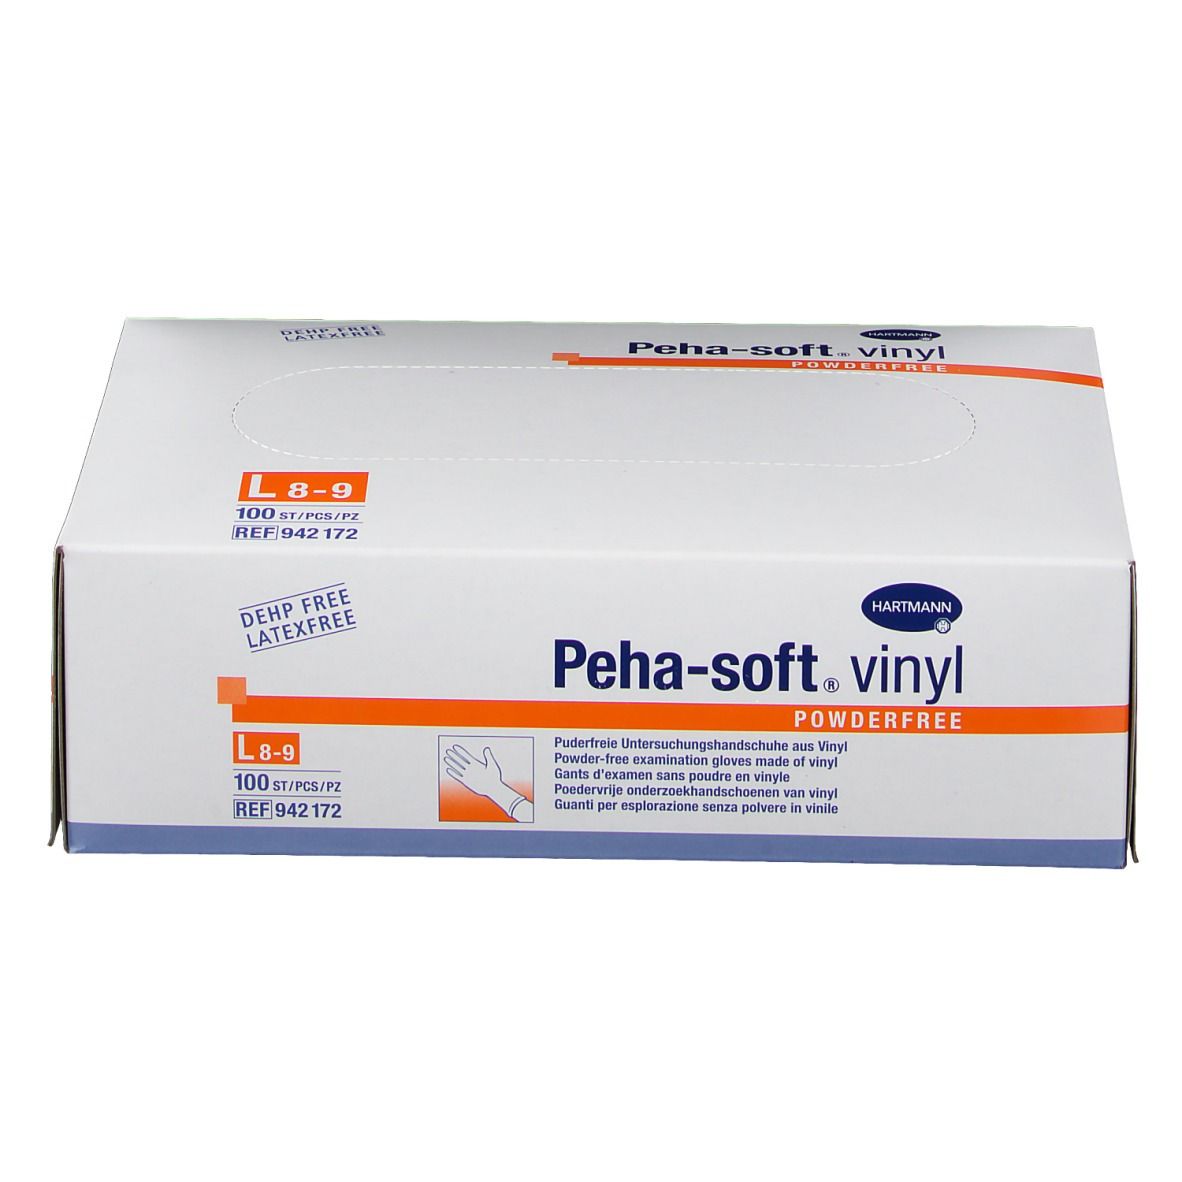 Peha-soft® vinyl powderfree Untersuchungshandschuh Gr. L 8 - 9